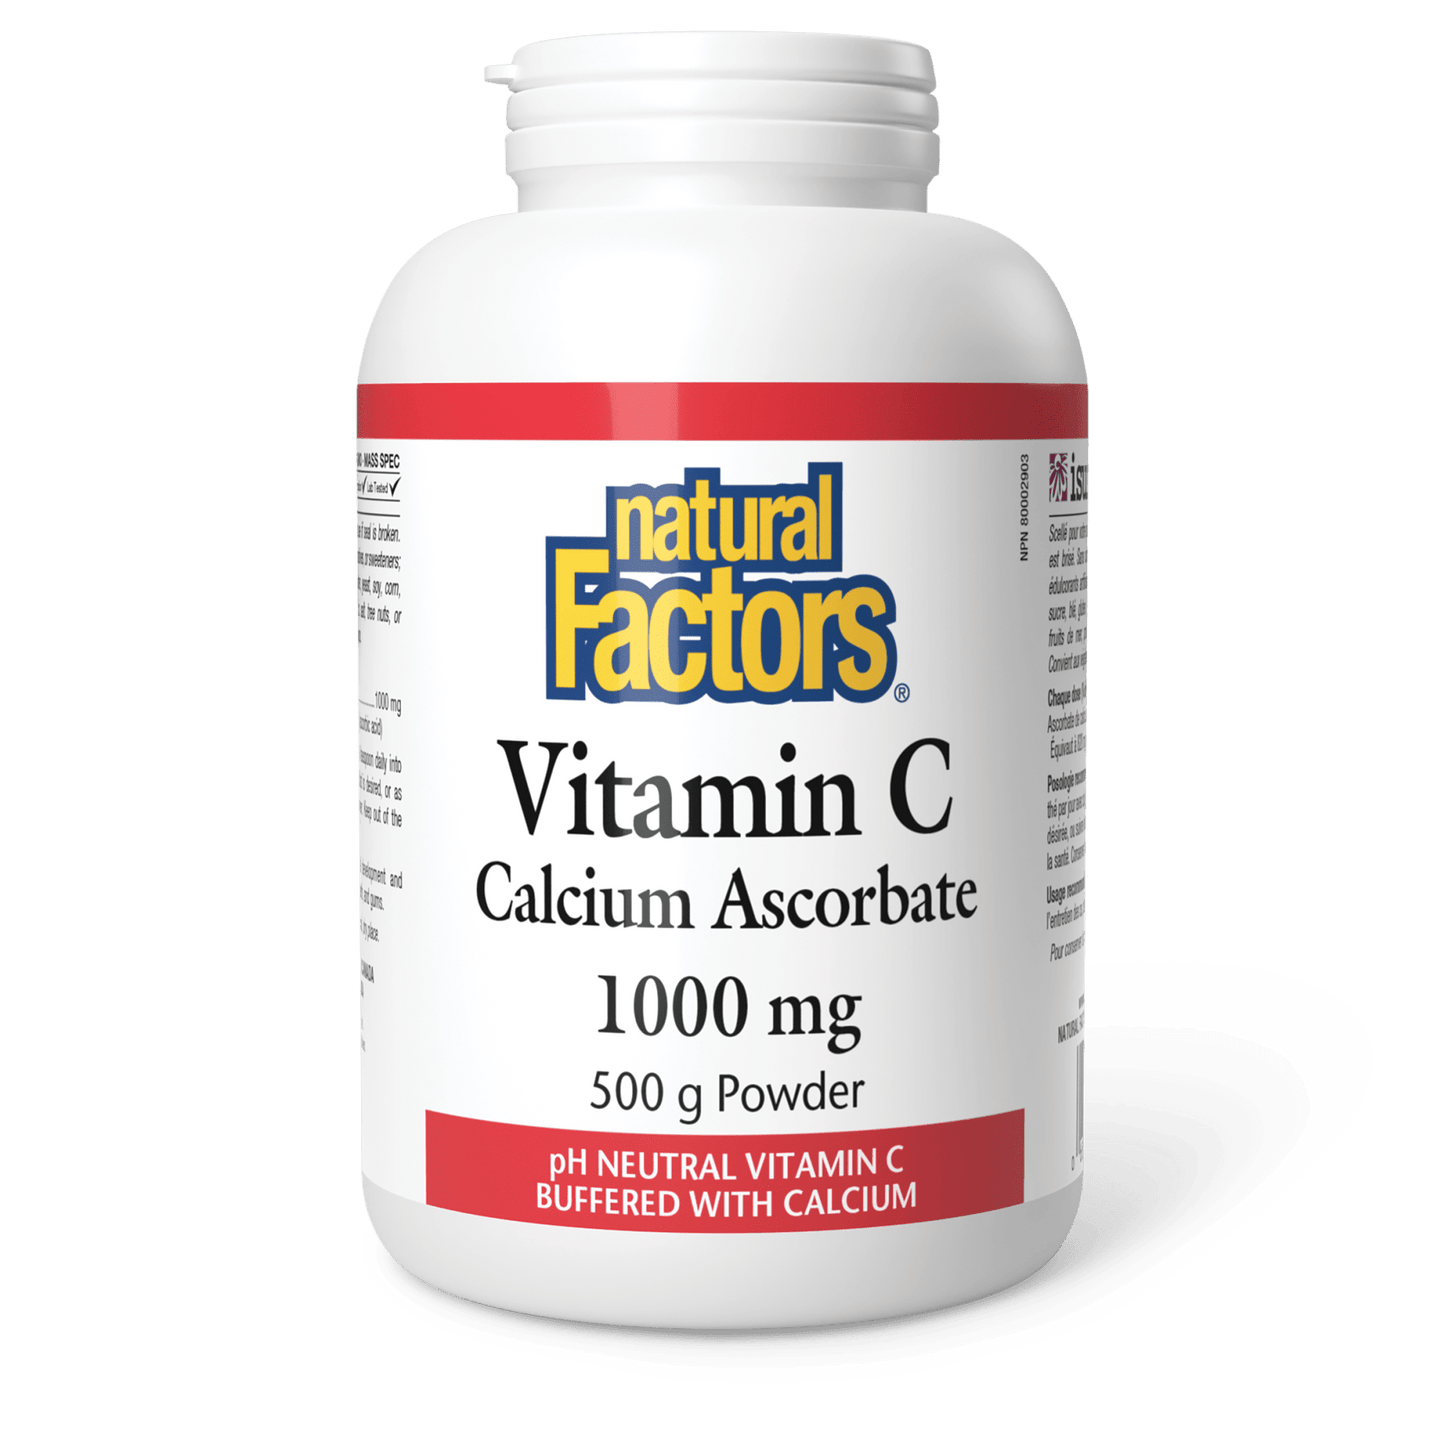 Vitamin C Calcium Ascorbate 1000 mg, Natural Factors|v|image|1372